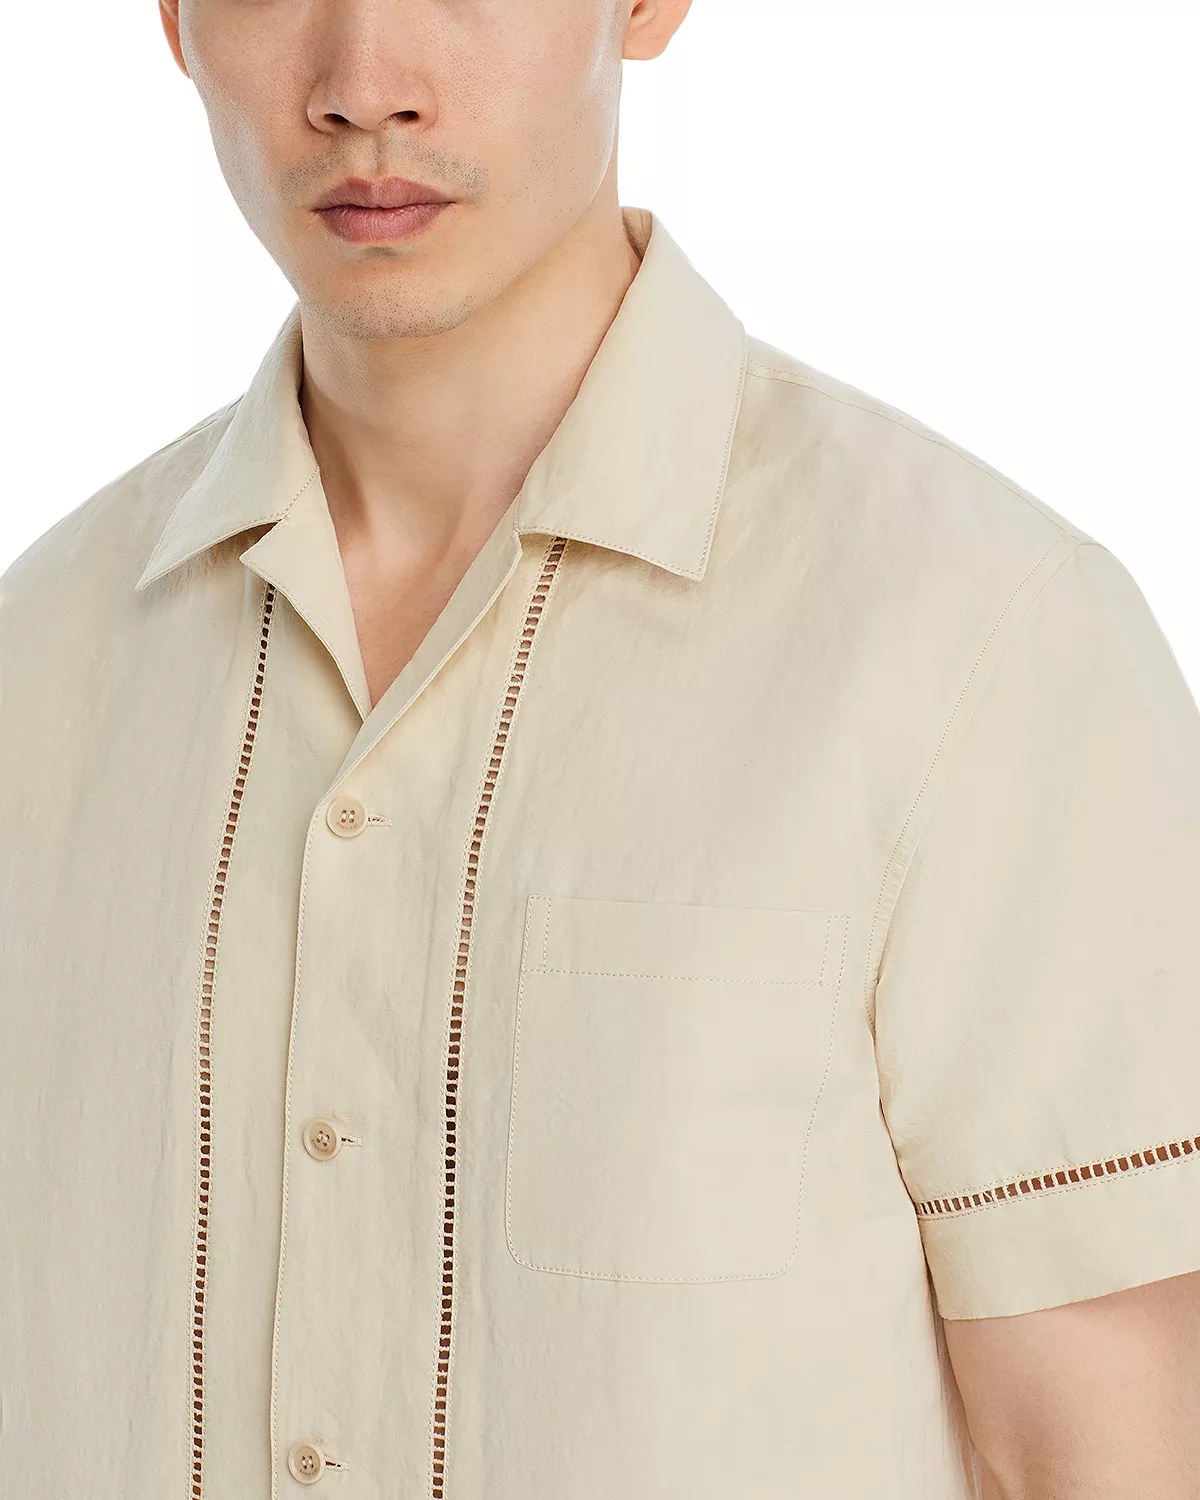 Marco Short Sleeve Camp Shirt - 5